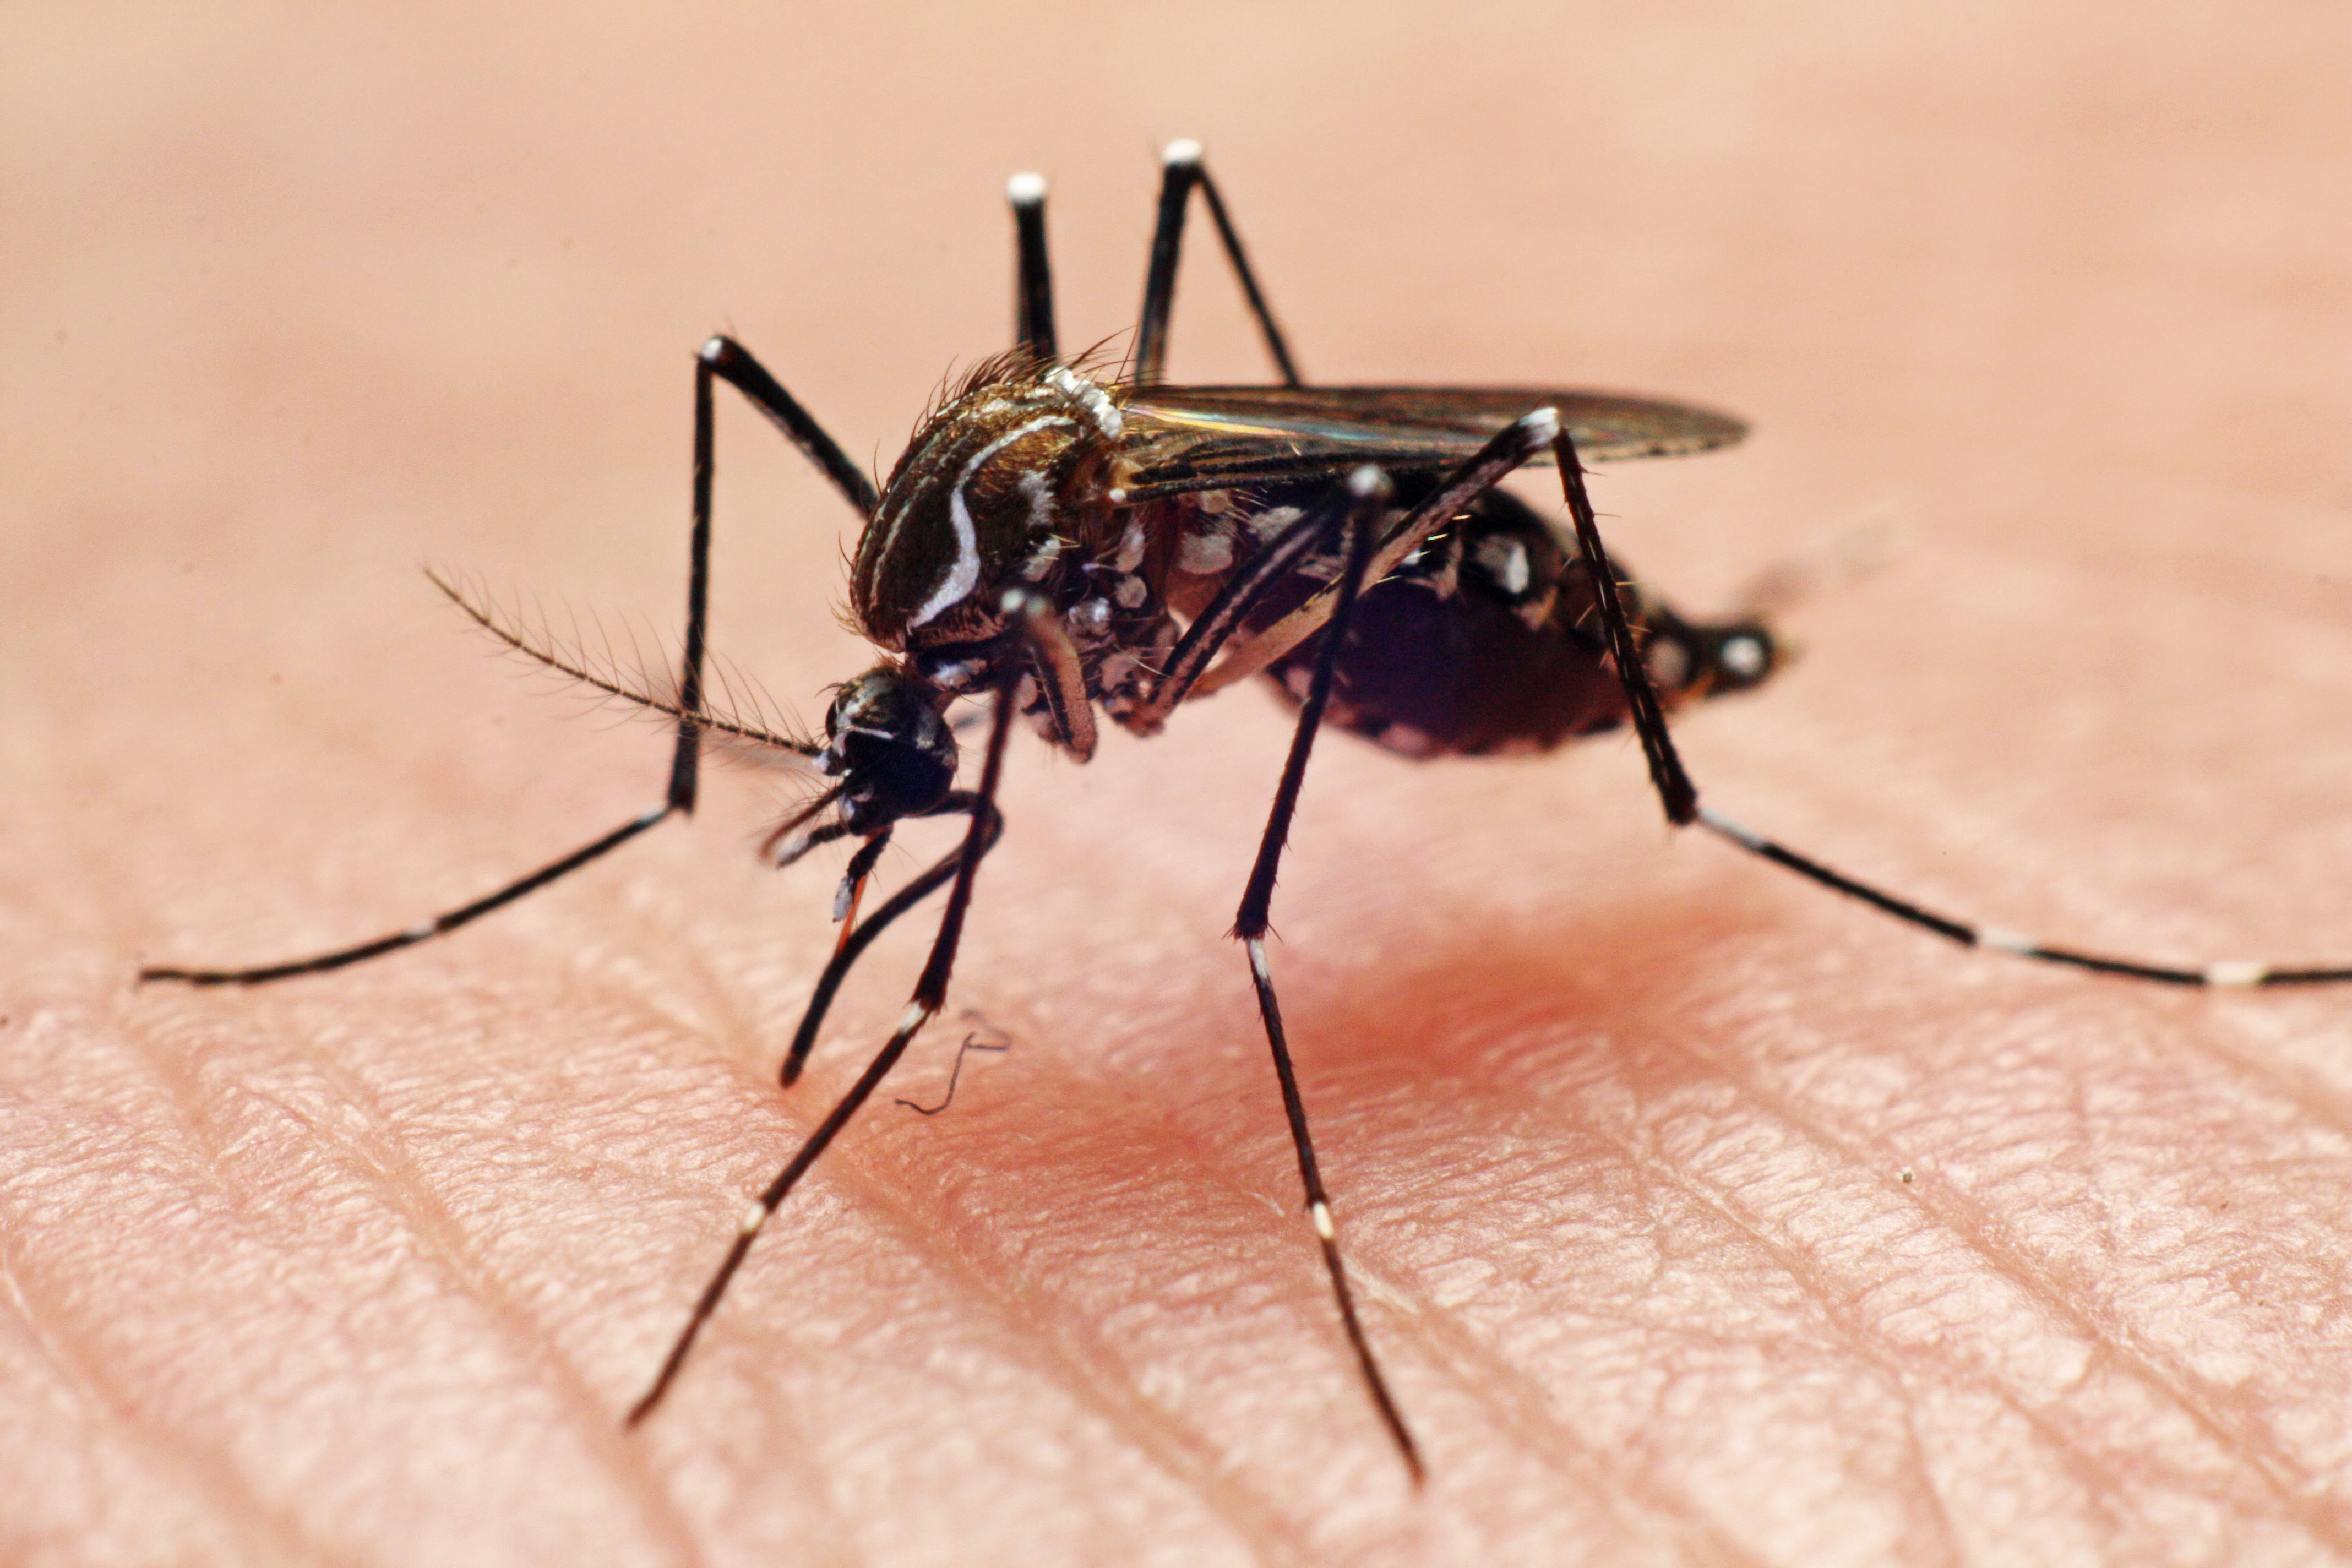 Dengue fever vector, mosquito biting hand. (Joao Paulo Burini&mdash;Getty Images)